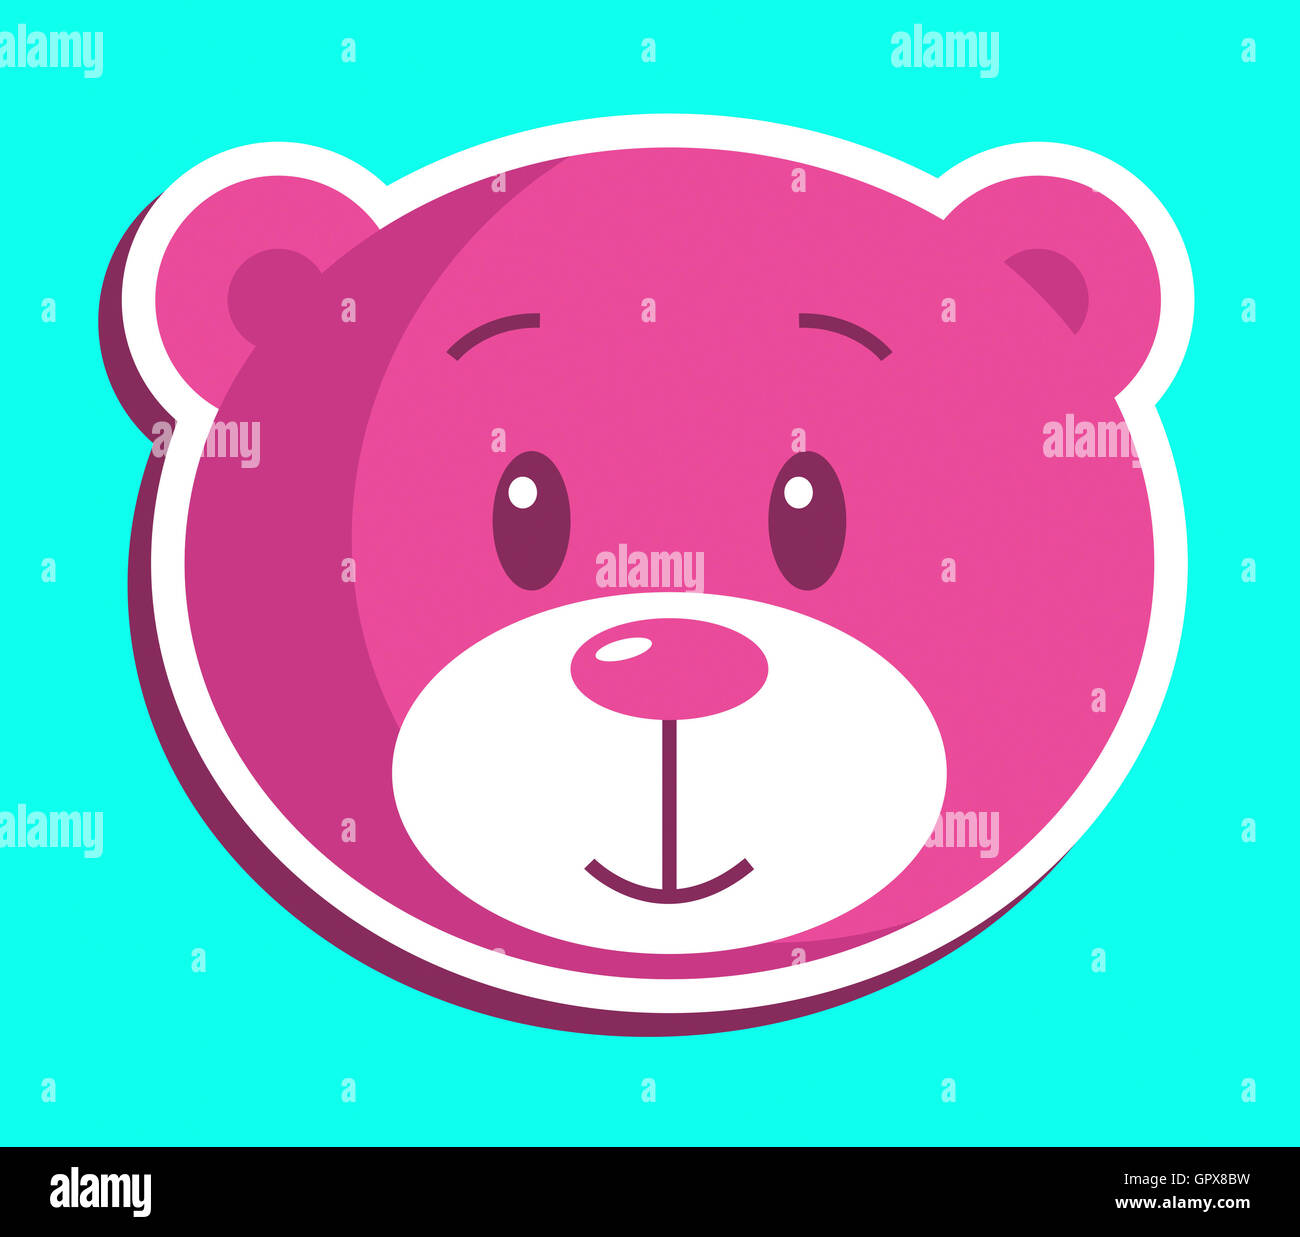 Teddy Bear Icon Showing Symbol Symbols And Soft Stock Photo